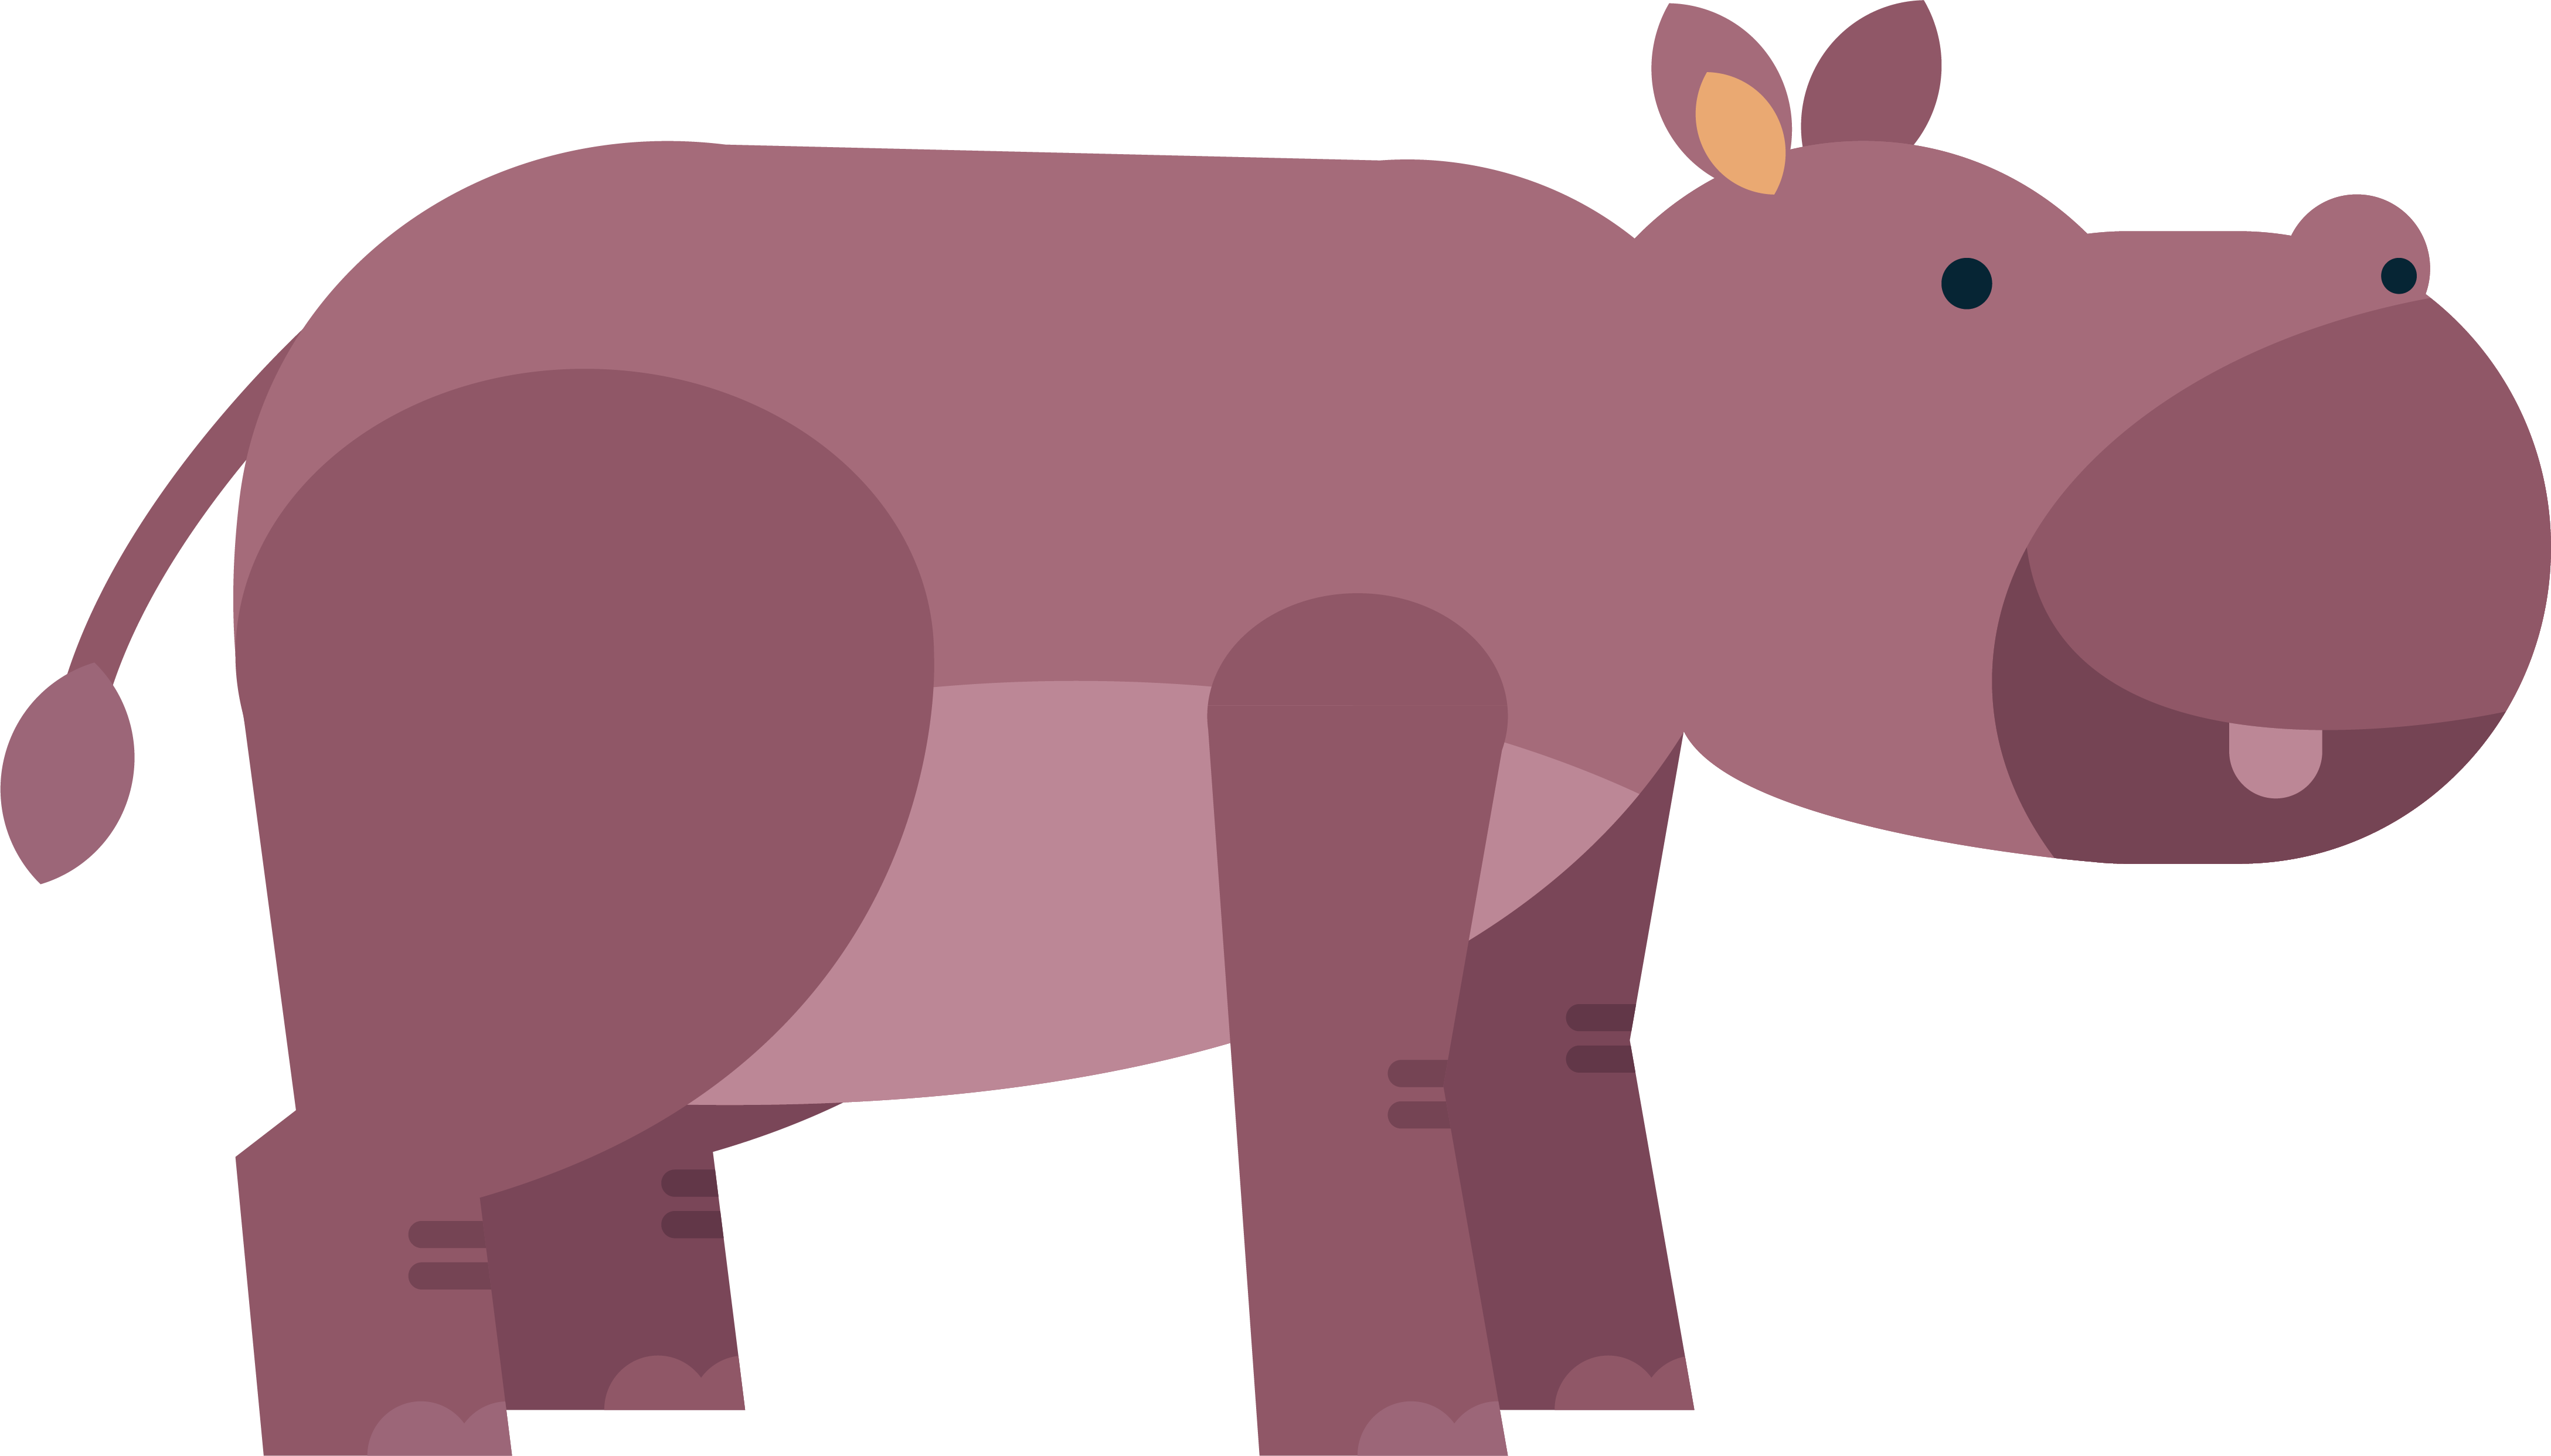 Dog Hippopotamus Pig Cartoon Illustration - Hippopotamus (4352x2484)